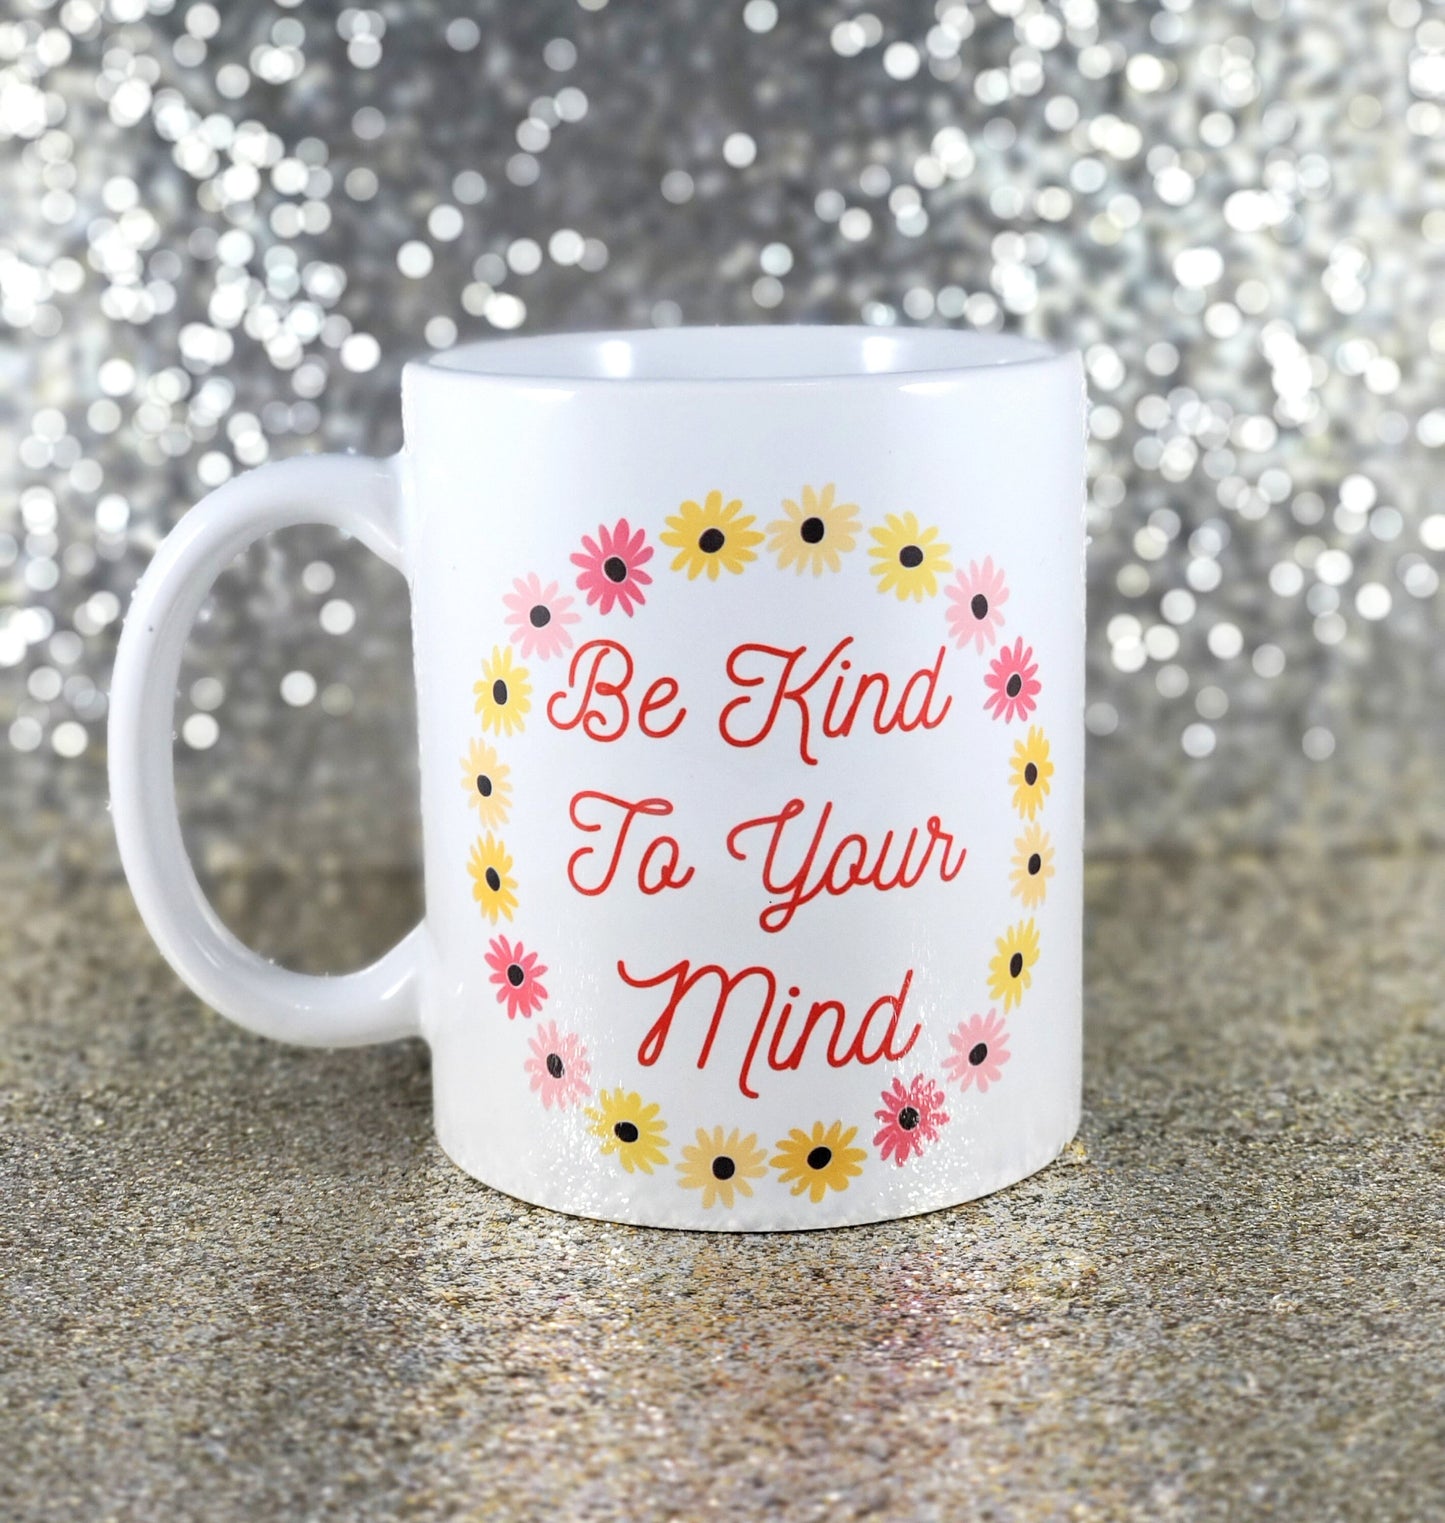 Be Kind to Your Mind mug